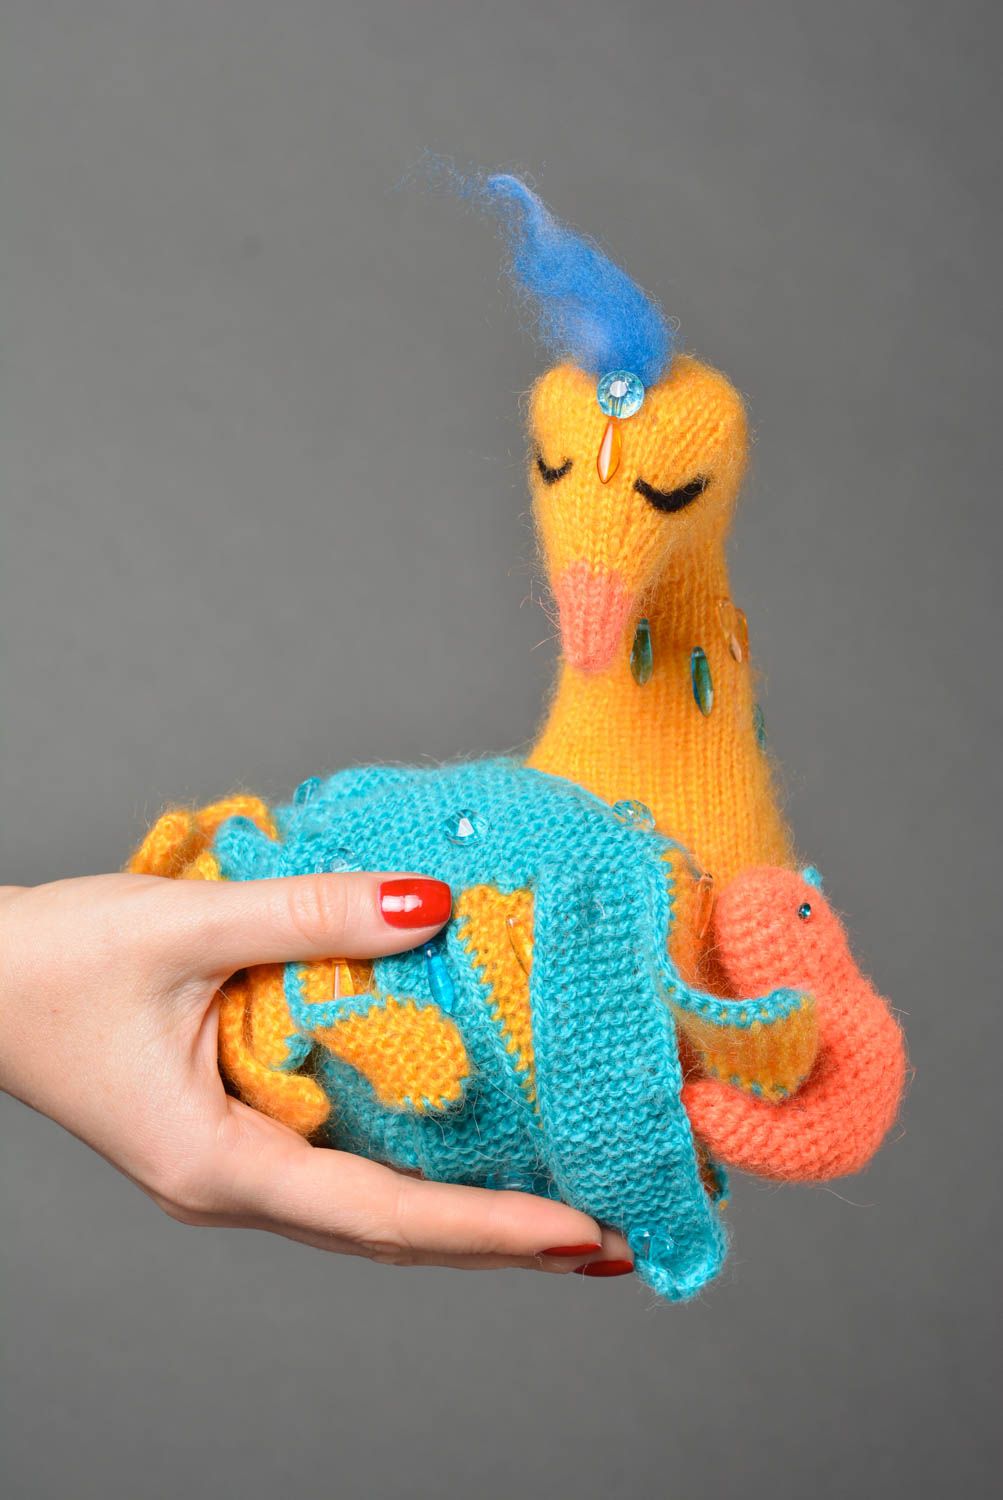 Handmade toy animal toy designer toy unusual gift nursery decor gift for baby photo 3